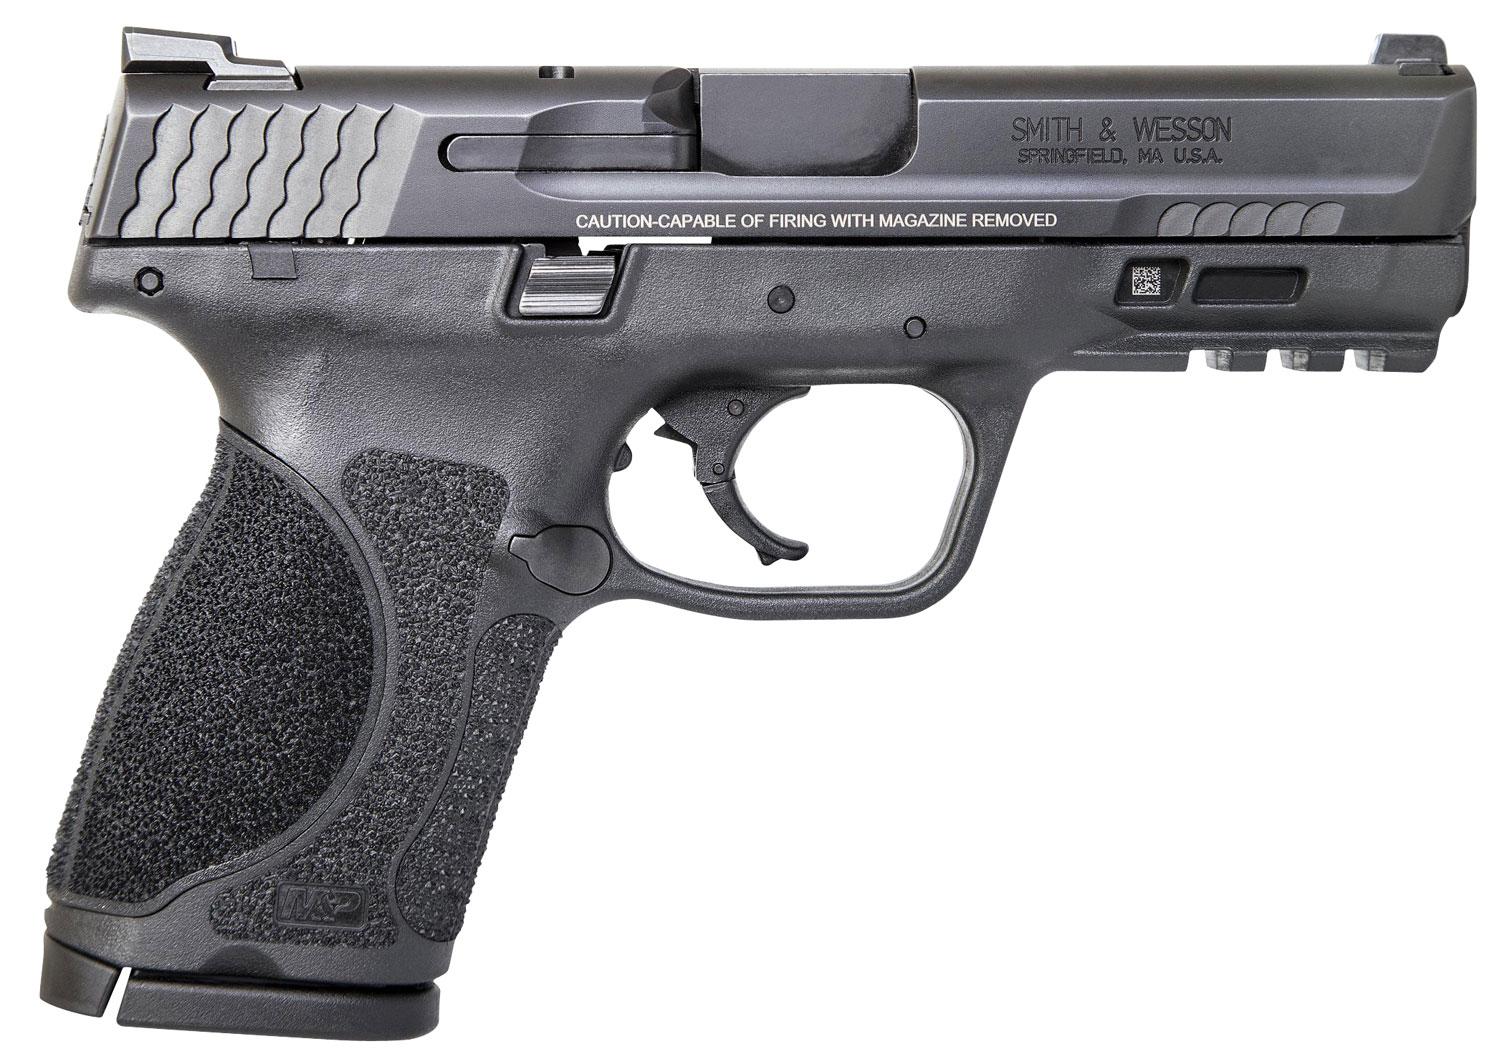 Smith & Wesson M&P M2.0 Pistol 11683, 9mm Luger, 4